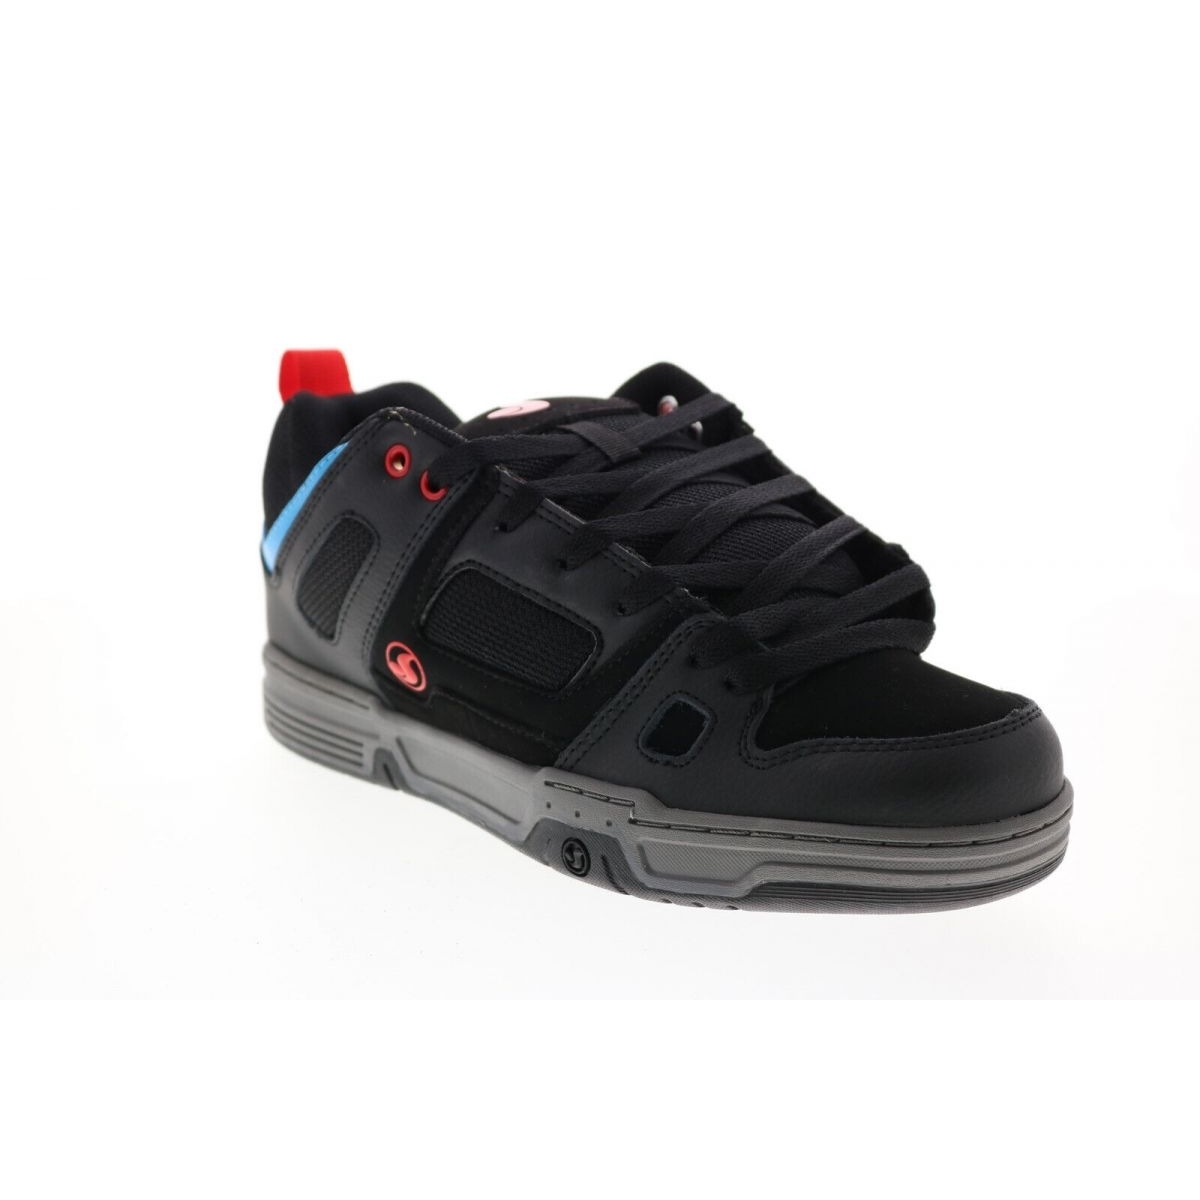 DVS Men's Gambol Skate Shoe 0 BLACK FIERY RED BLUE NUBUCK - BLACK FIERY RED BLUE NUBUCK, 8.5